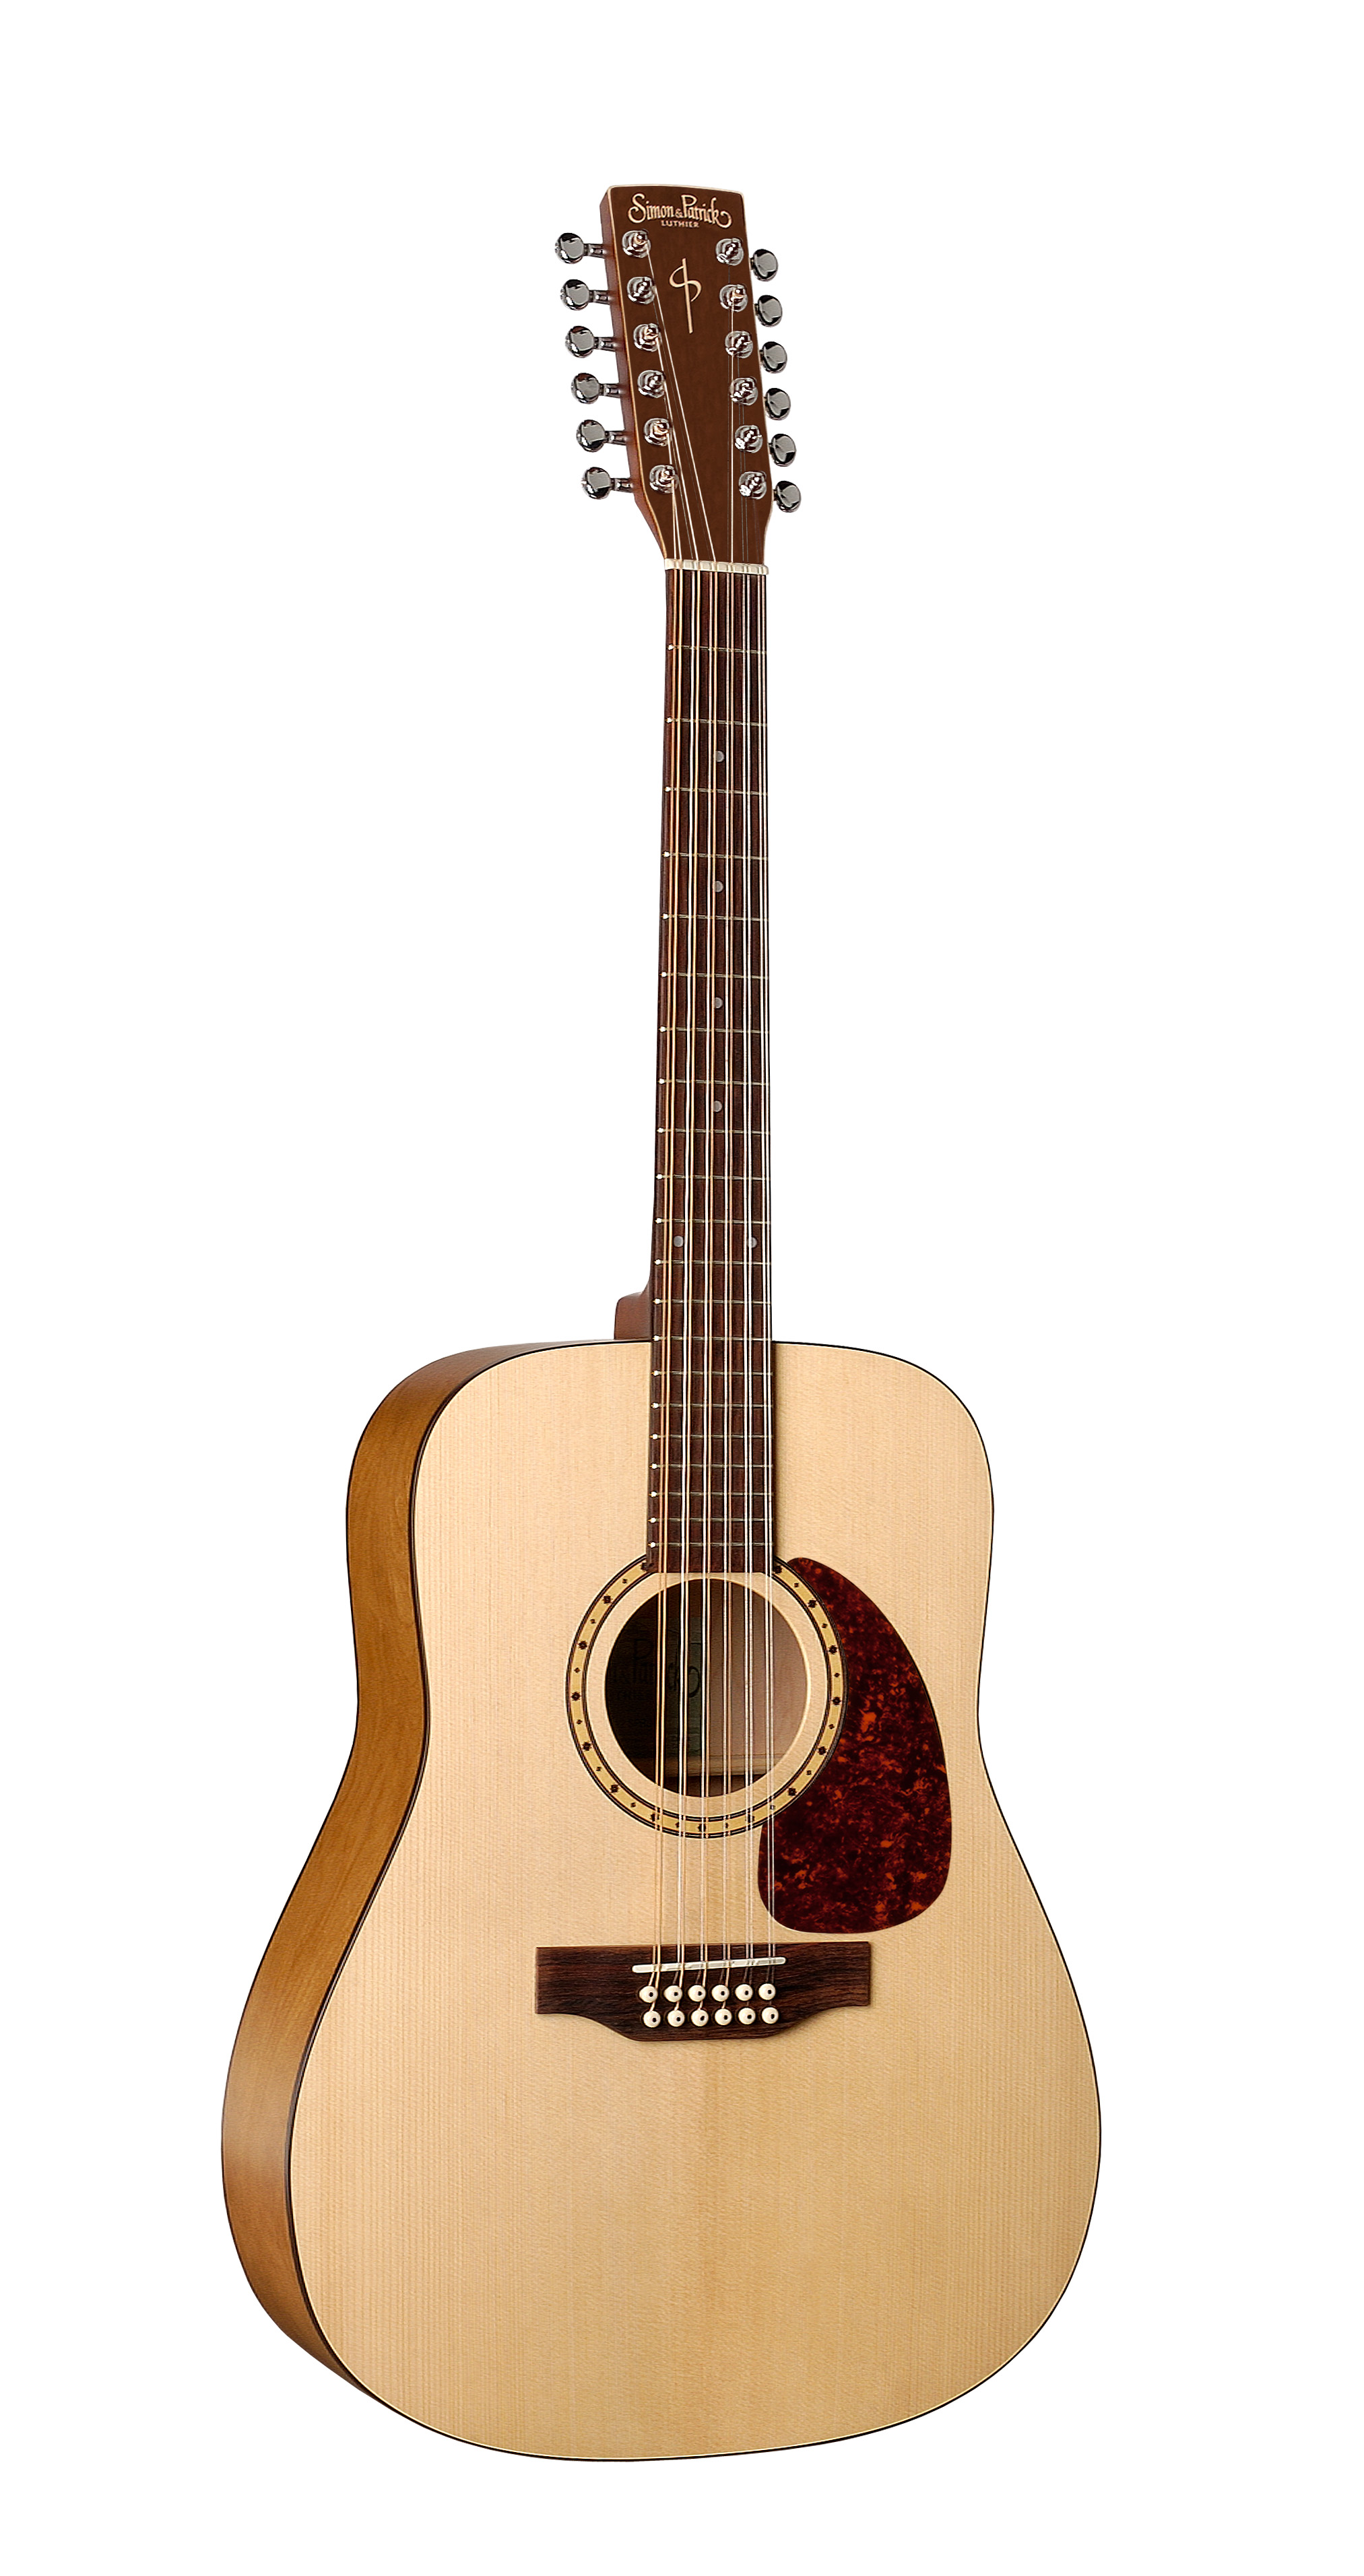 Simon & Patrick 28931 Woodland Spruce 12 String Acoustic Guitar